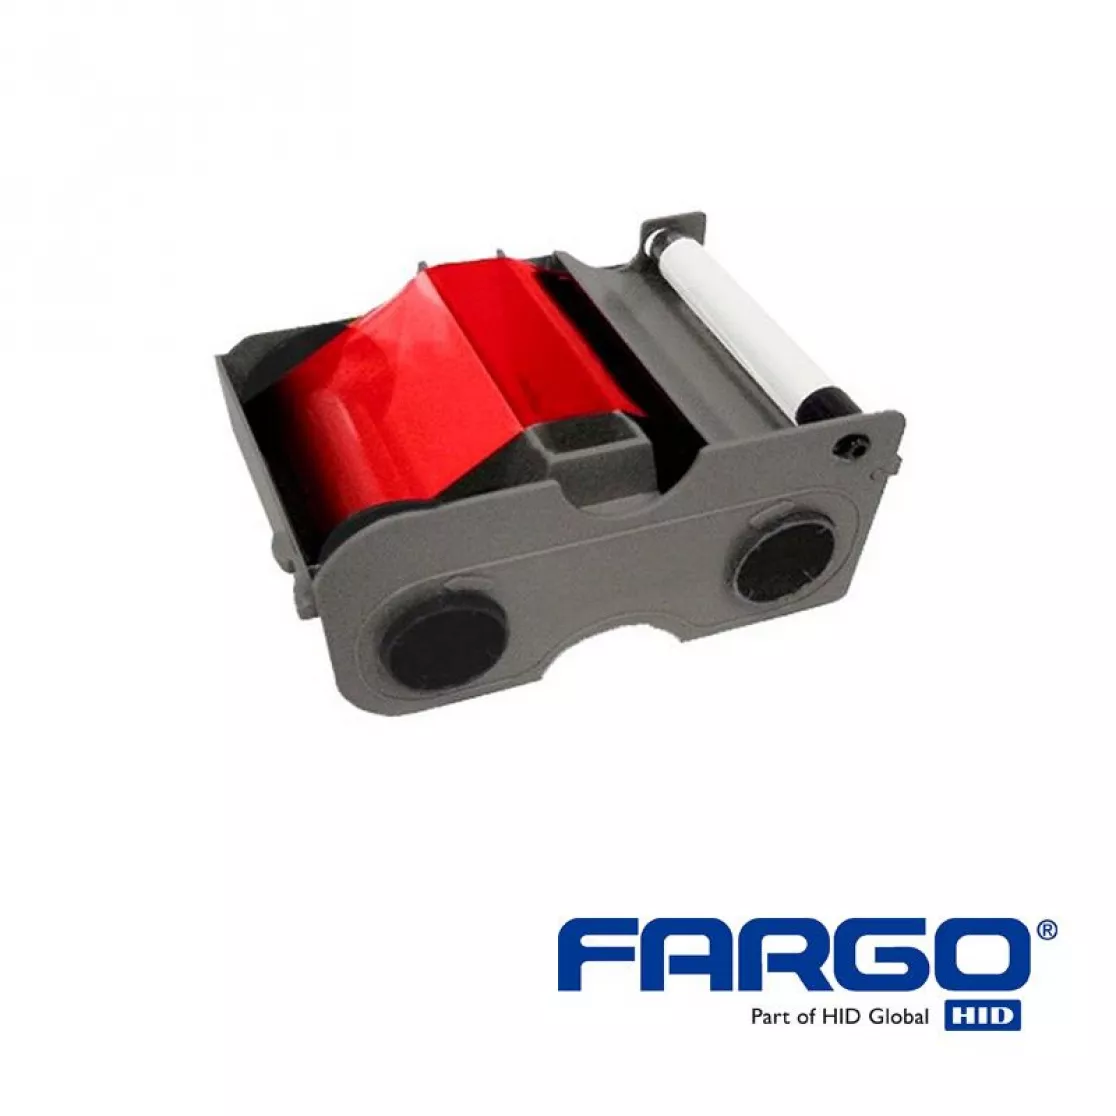 Red film for card printer HID Fargo C50